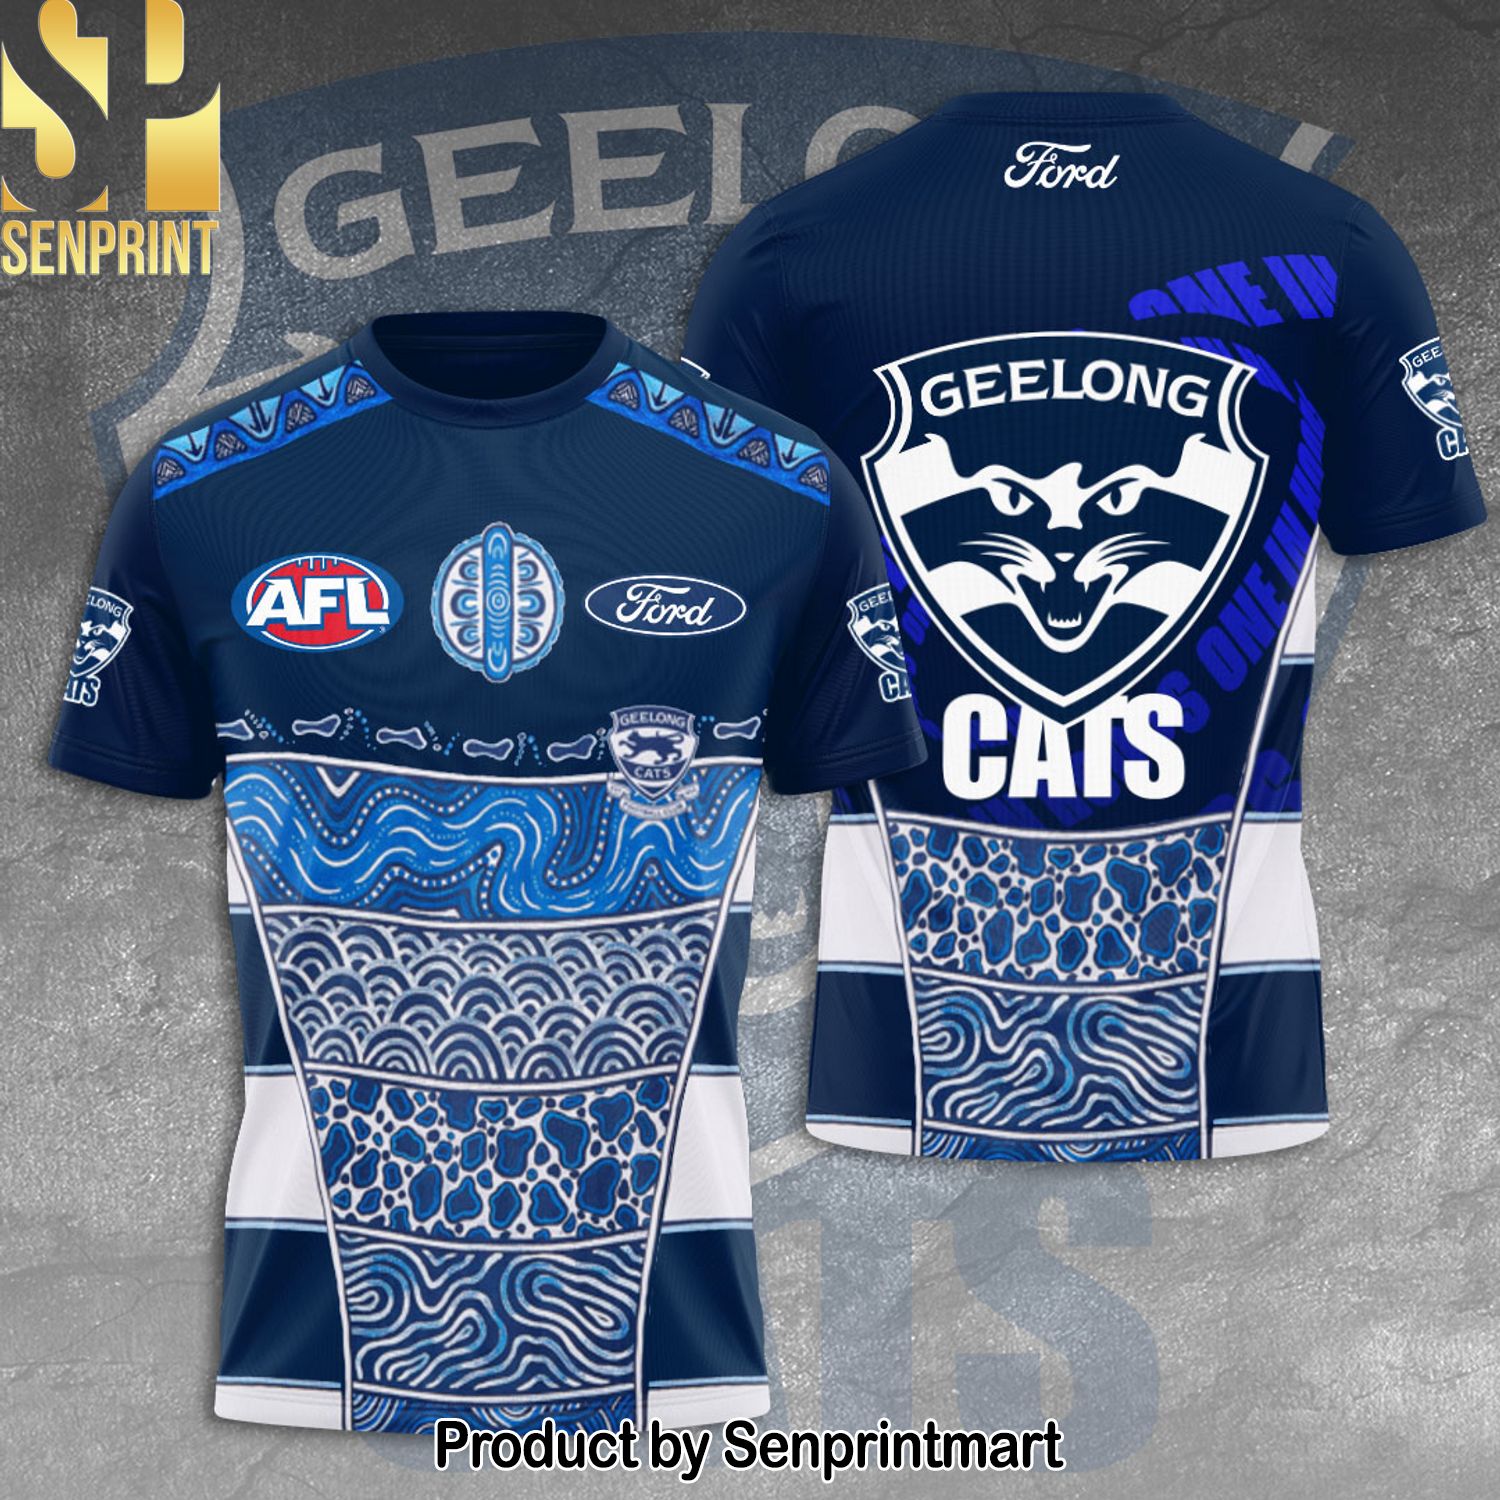 Geelong Football Club Full Printing Shirt – SEN0067